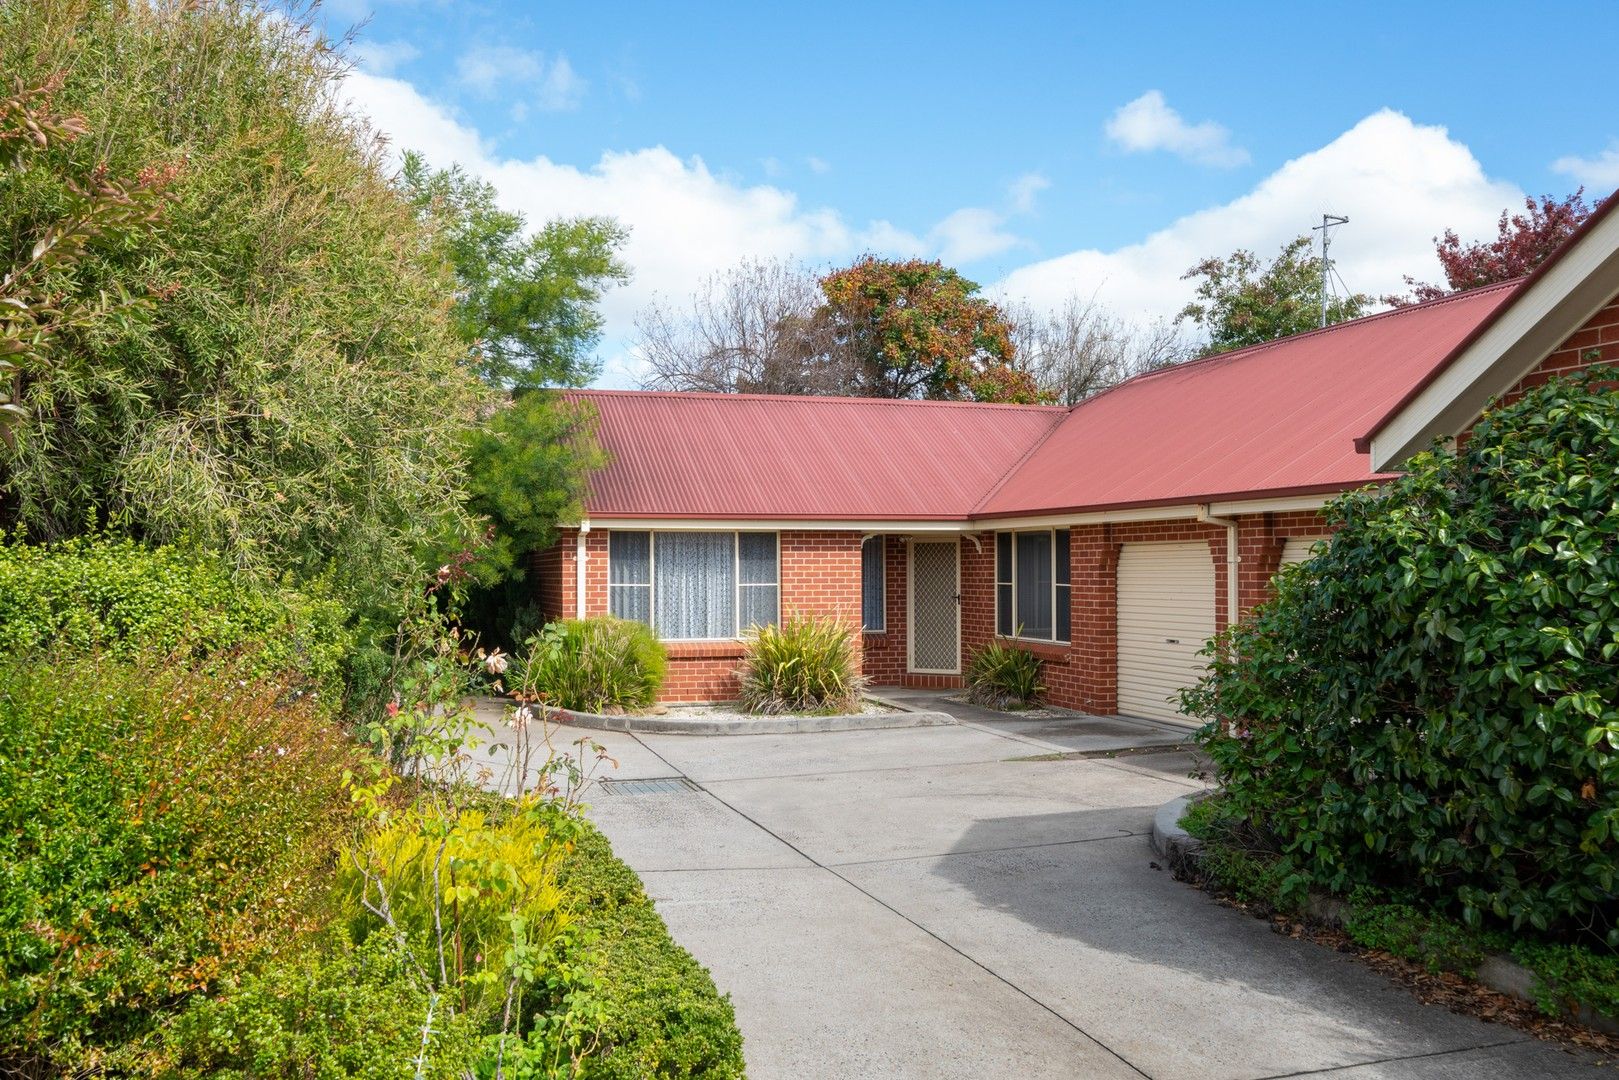 3 bedrooms Villa in 7/56 Morrisset Street BATHURST NSW, 2795